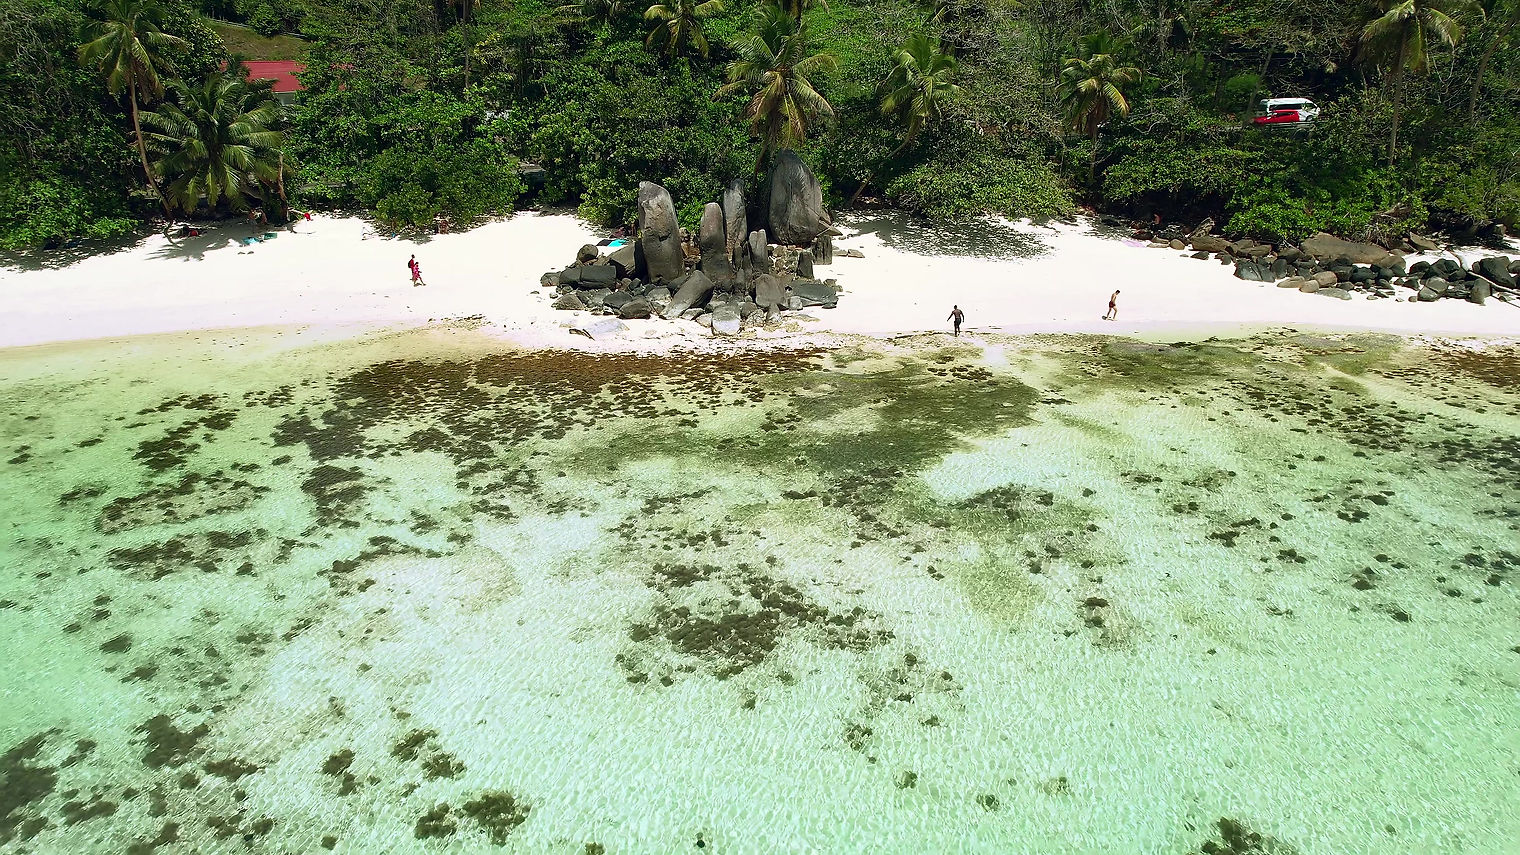 Mahe Seychelles reveal shot of people on the beach, rock boulders